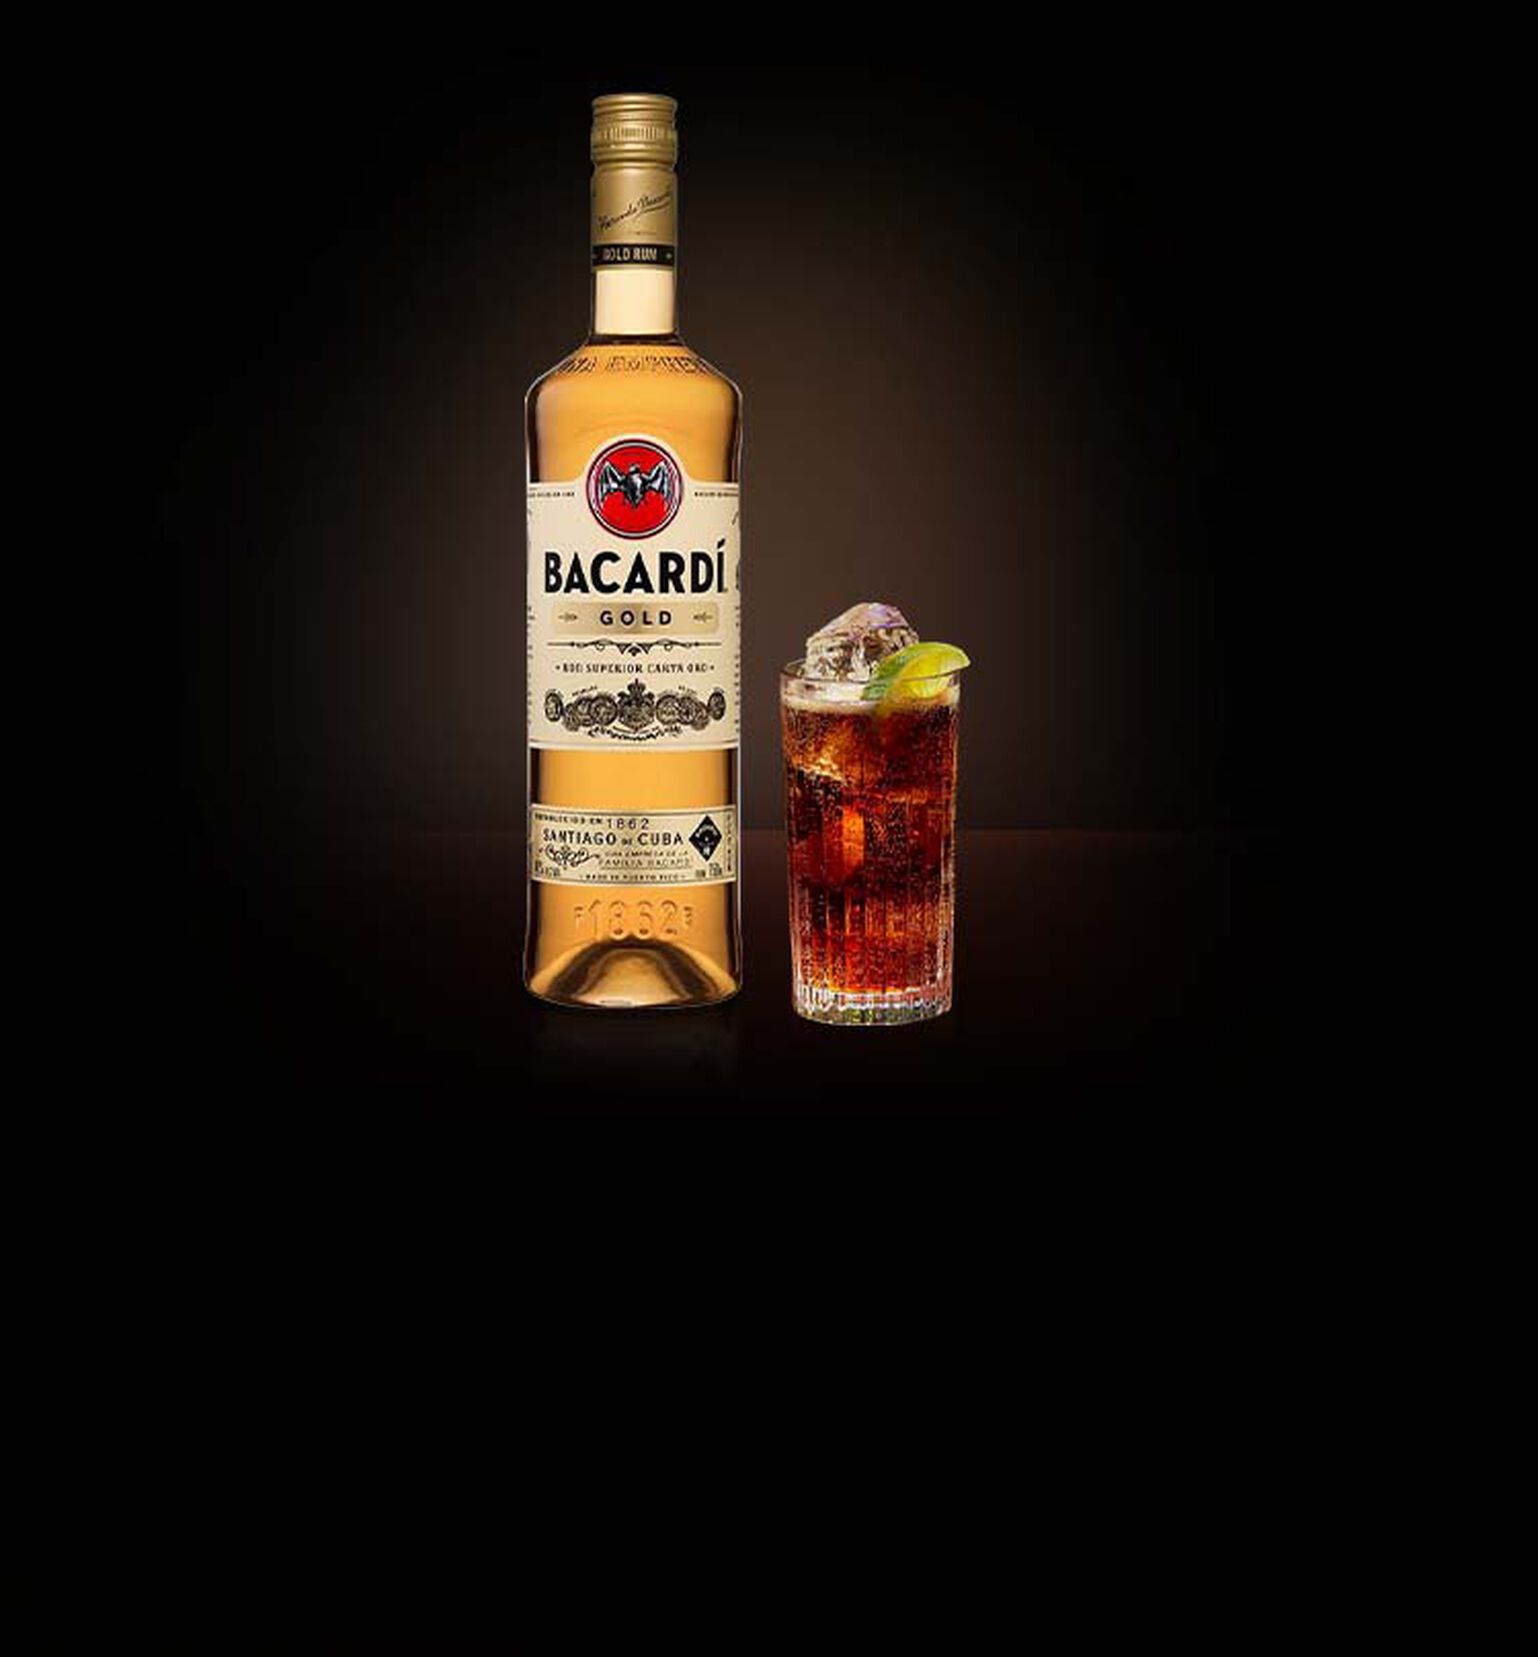 The BACARDÍ Cuba Libre Cocktail